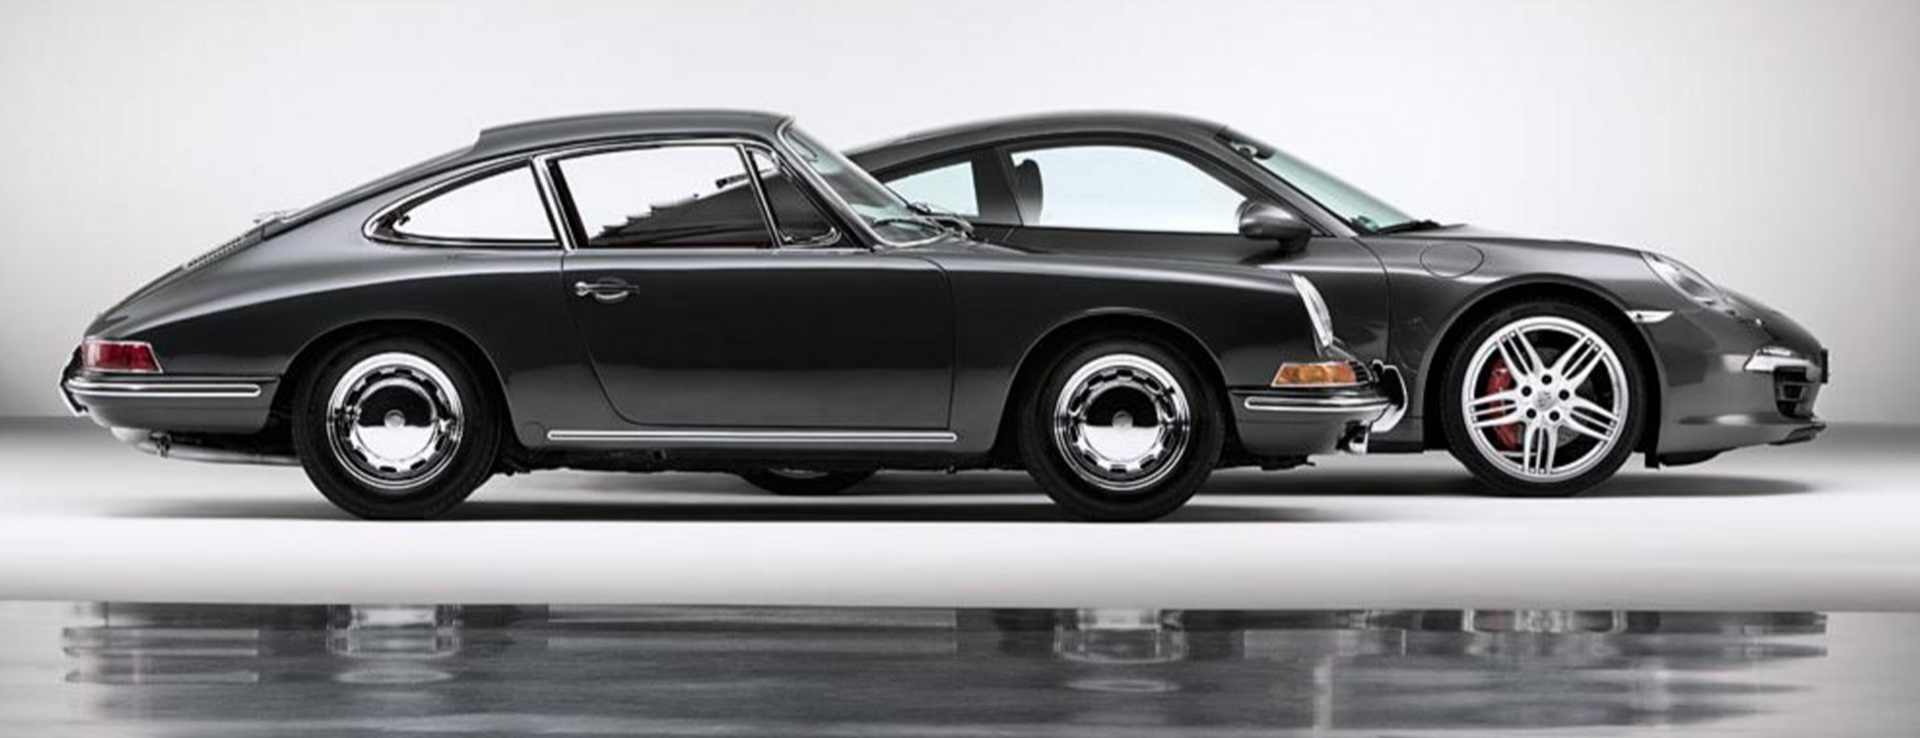 Classic 1964 Porsche 911 and 911 Carrera 4S (type 992)